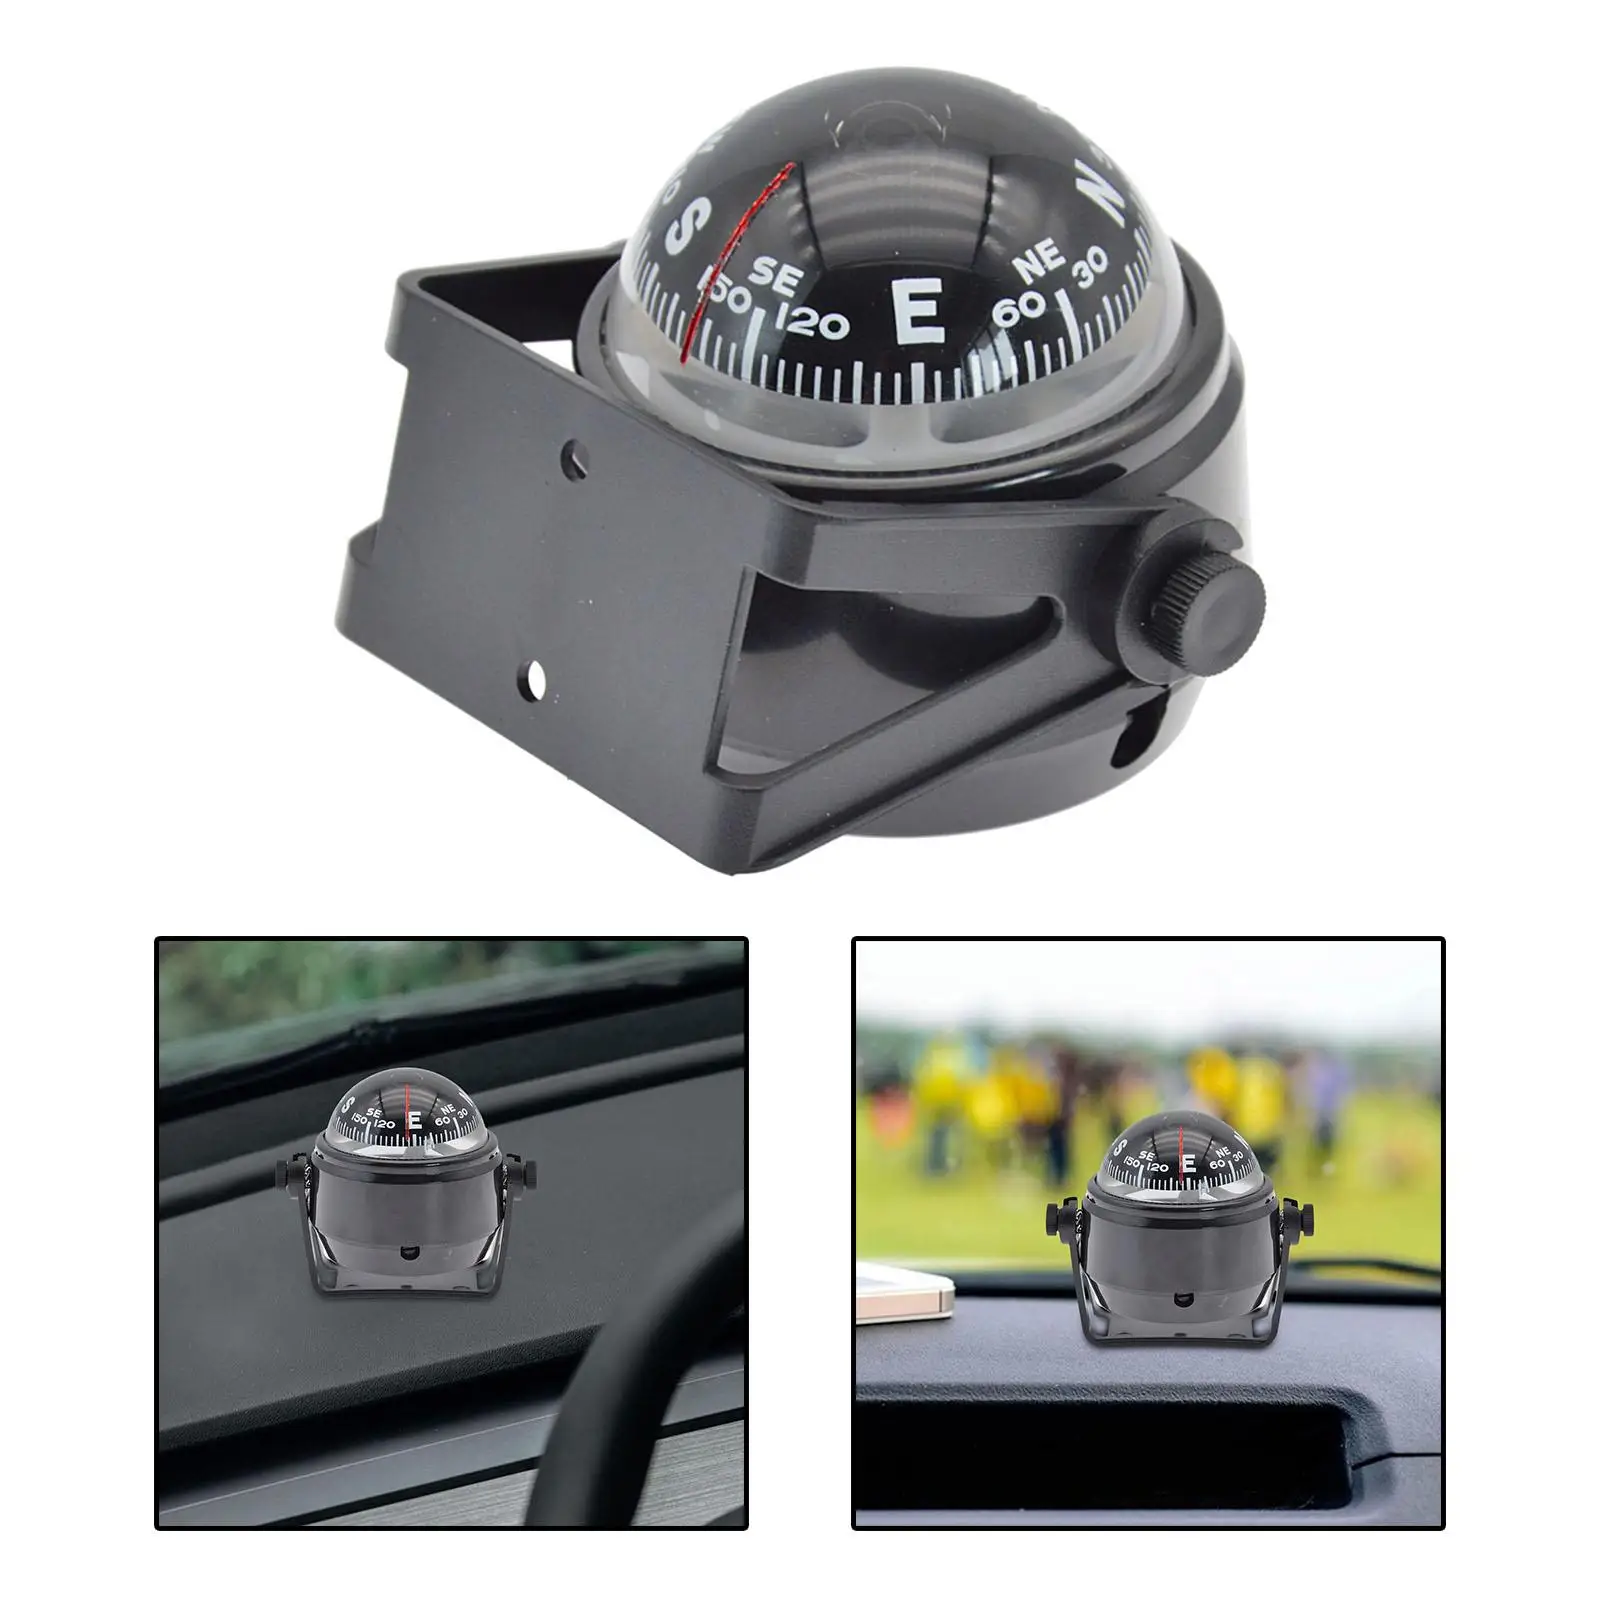 Car Compass Ball High Accuracy Mount Waterproof Automotive Navigation Direction